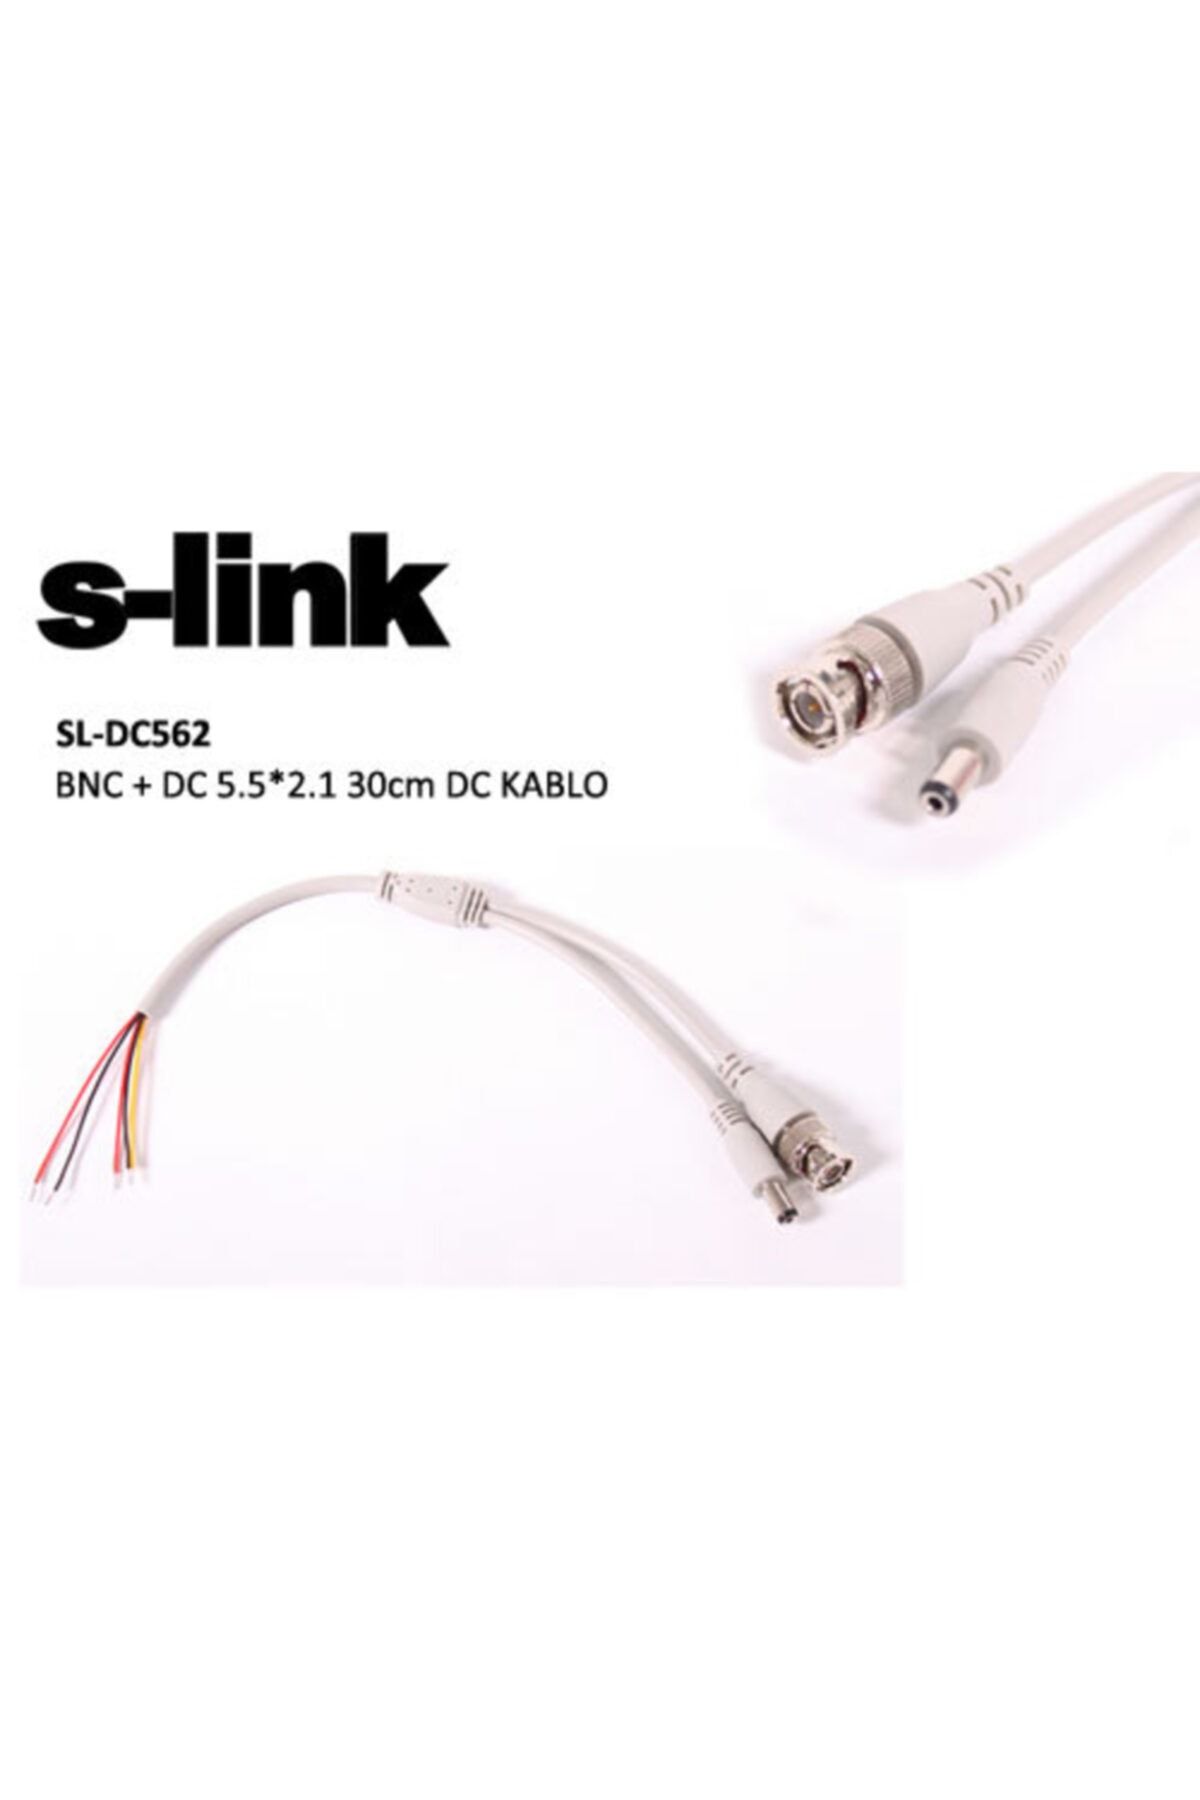 S-Link Bncvedc5.5*2.1 0,30 Cm Dc Kablo 10 Lu (1 Paket 10 Adet) Sl-dc562